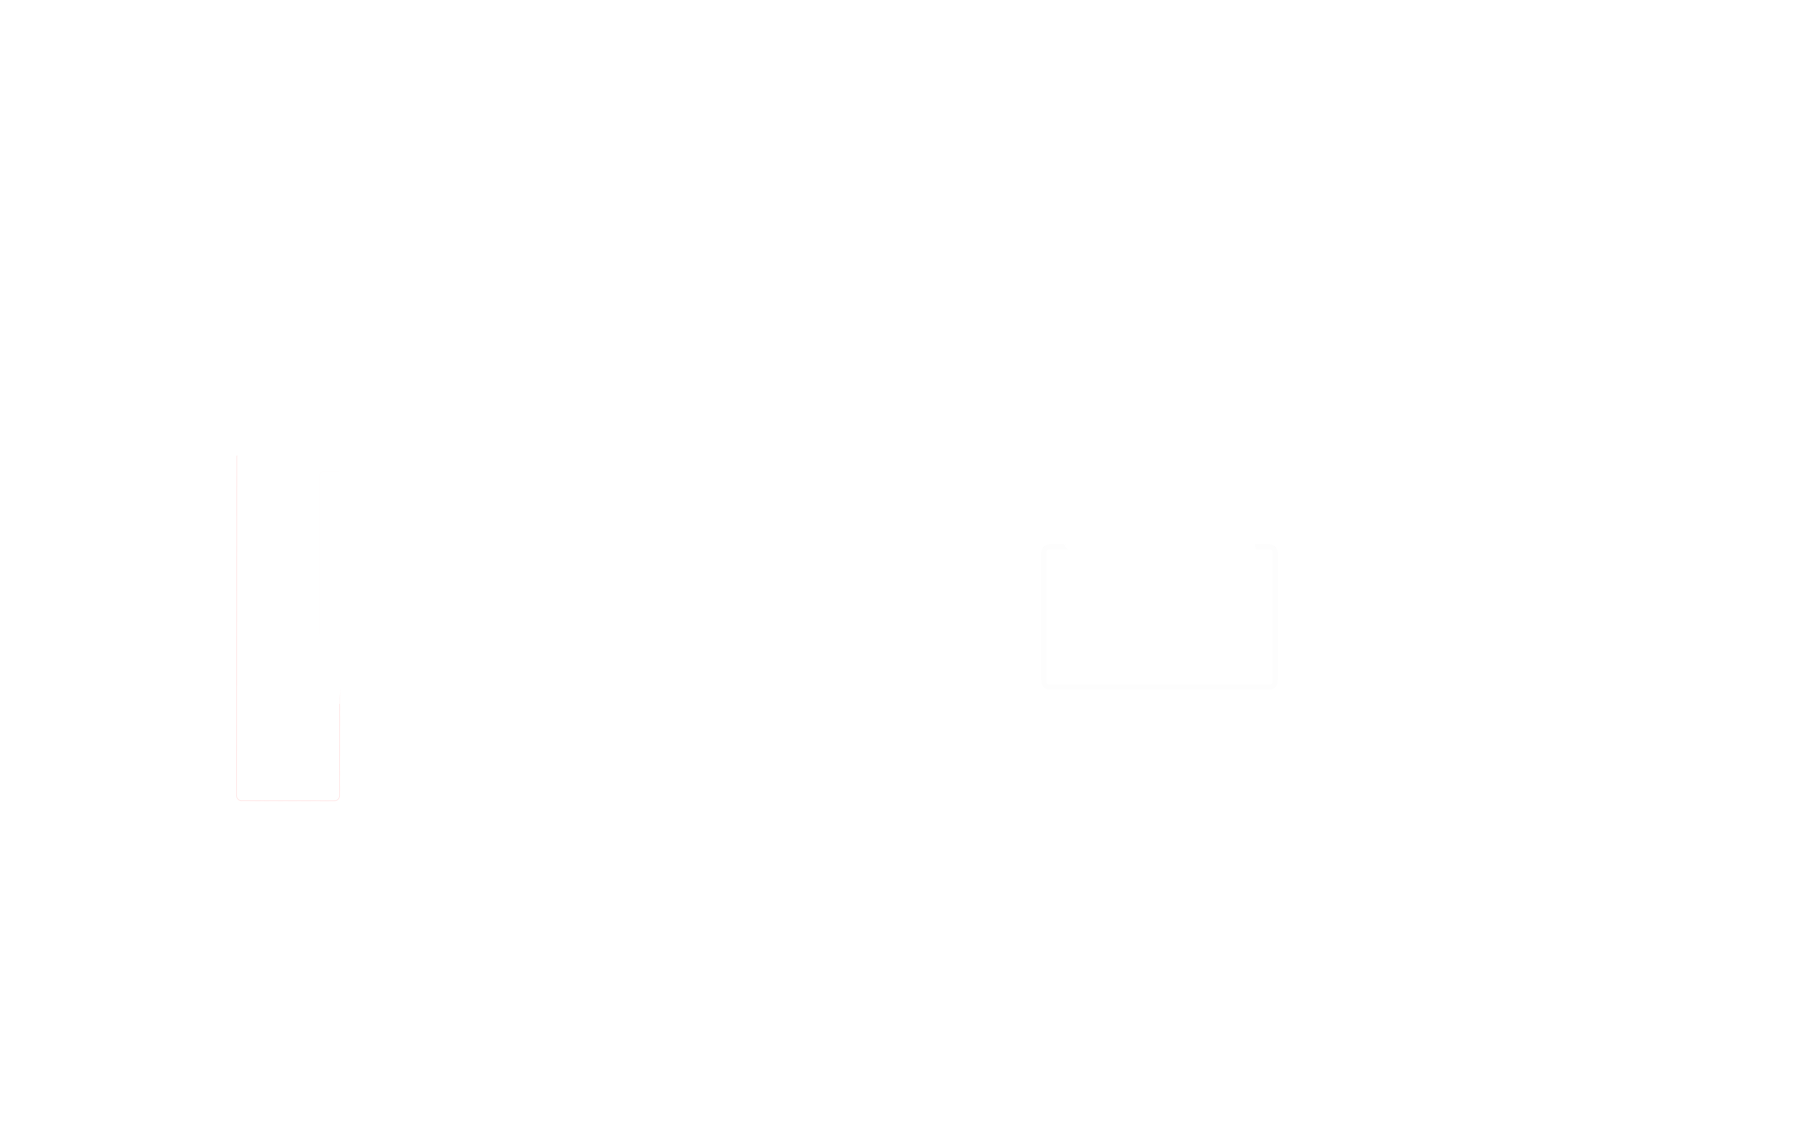 Bridgeclub Soest